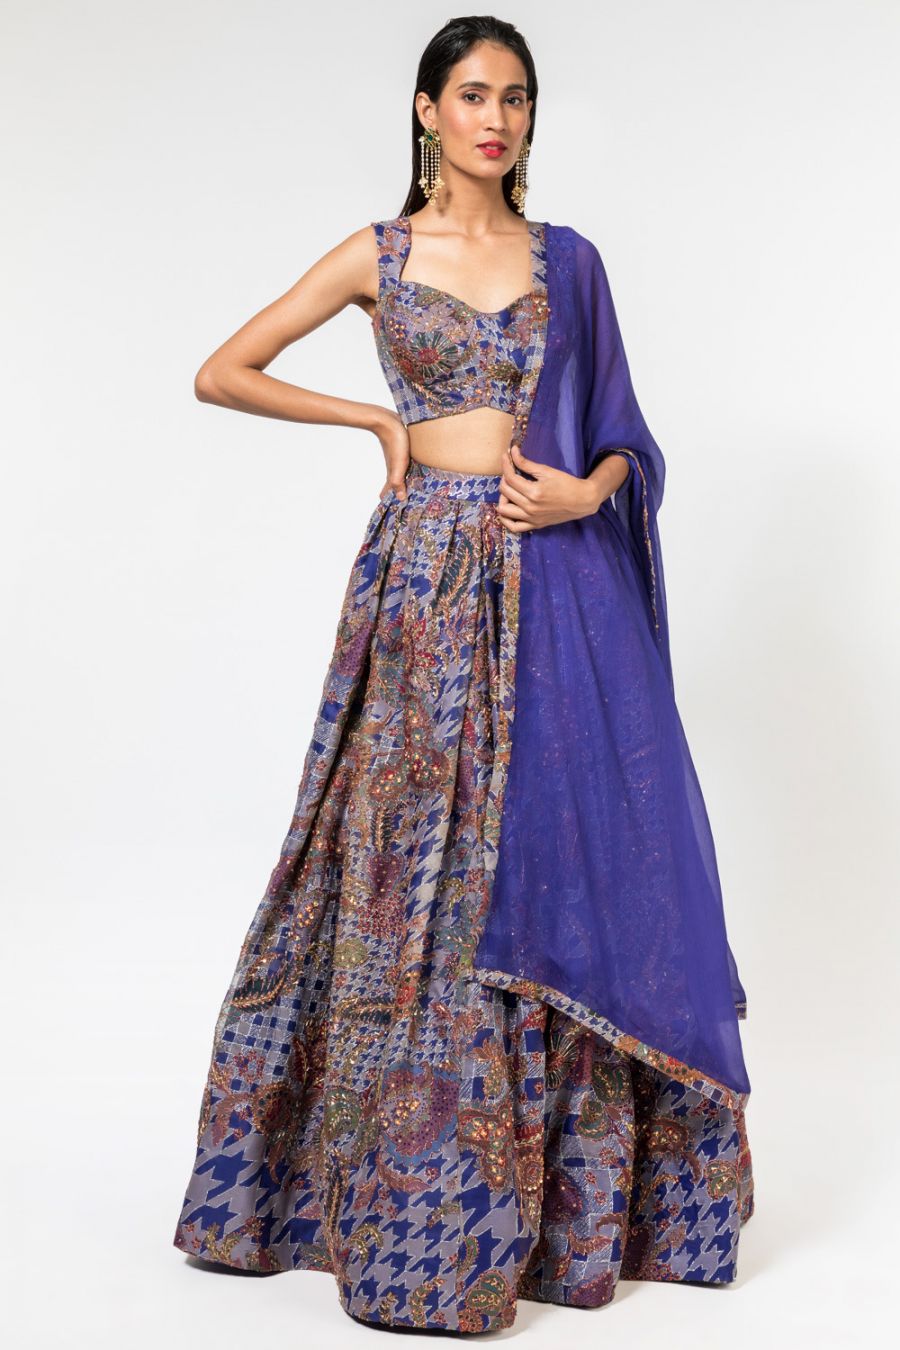 Violet Embellished Juna Printed Lehenga Set by Aisha Rao at KYNAH